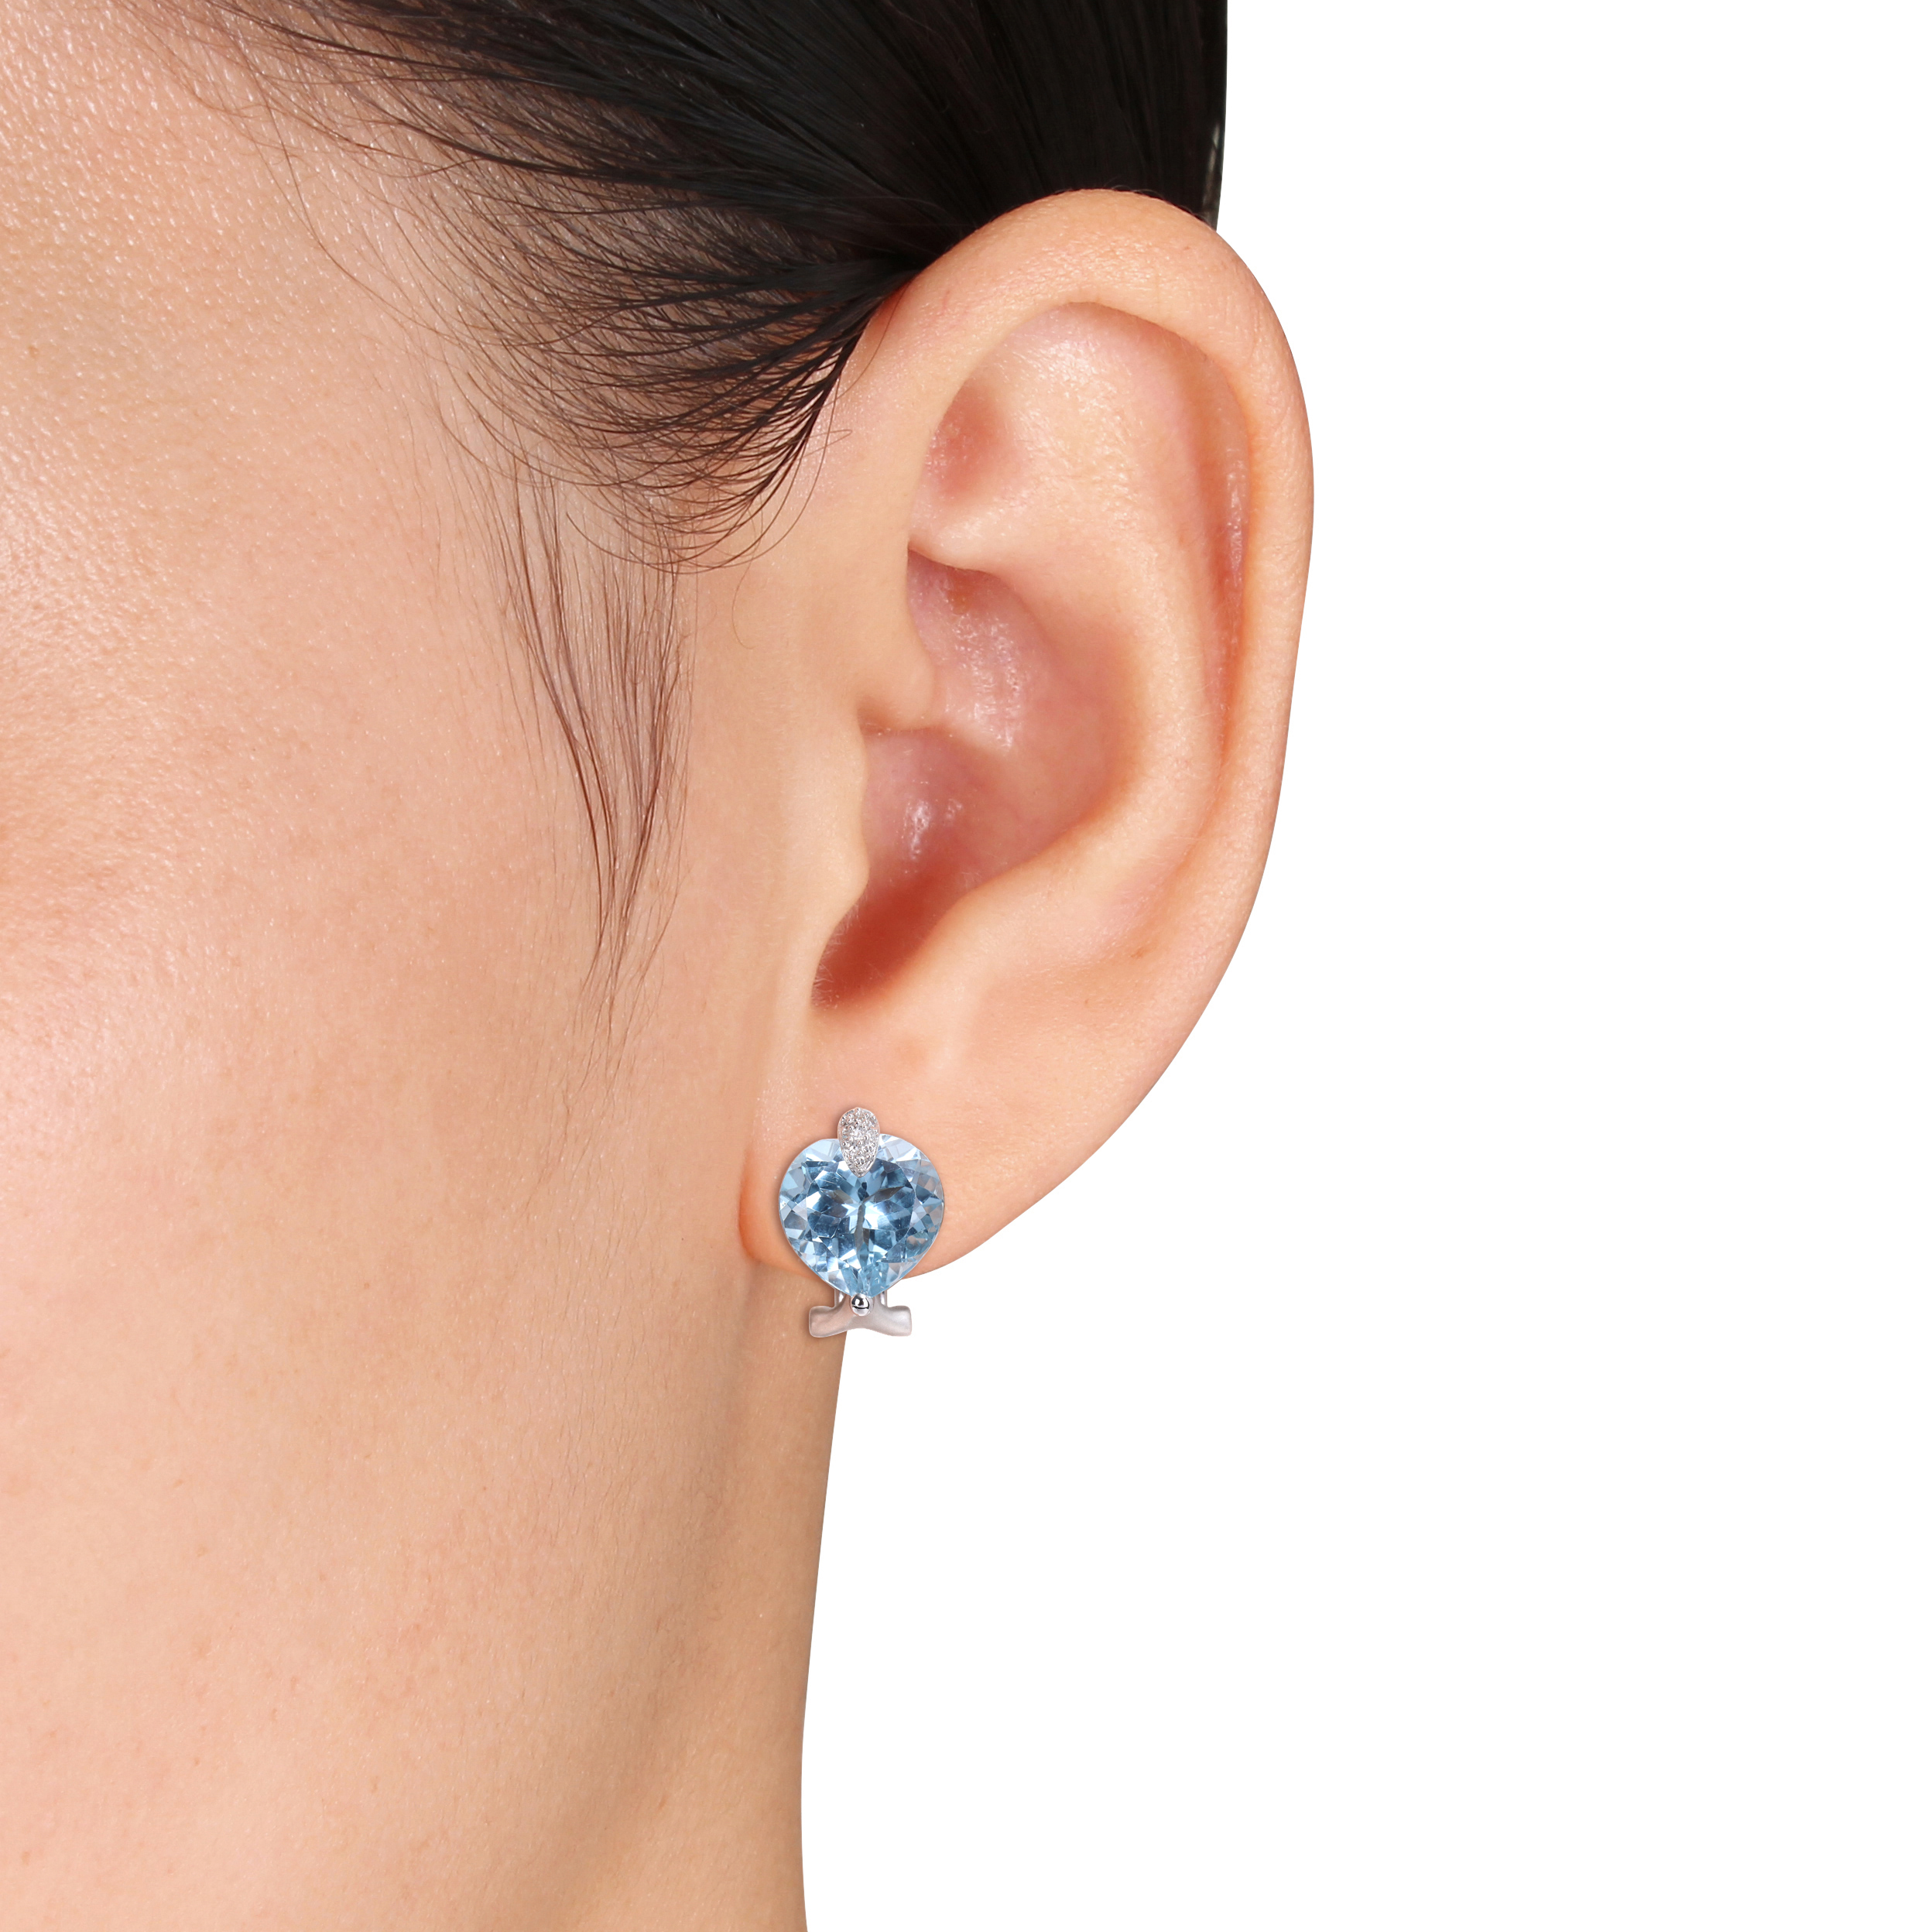 14 CT TGW Heart-Cut Sky Blue Topaz and 1/10ct TDW Diamond Leverback Earrings in 14k White Gold